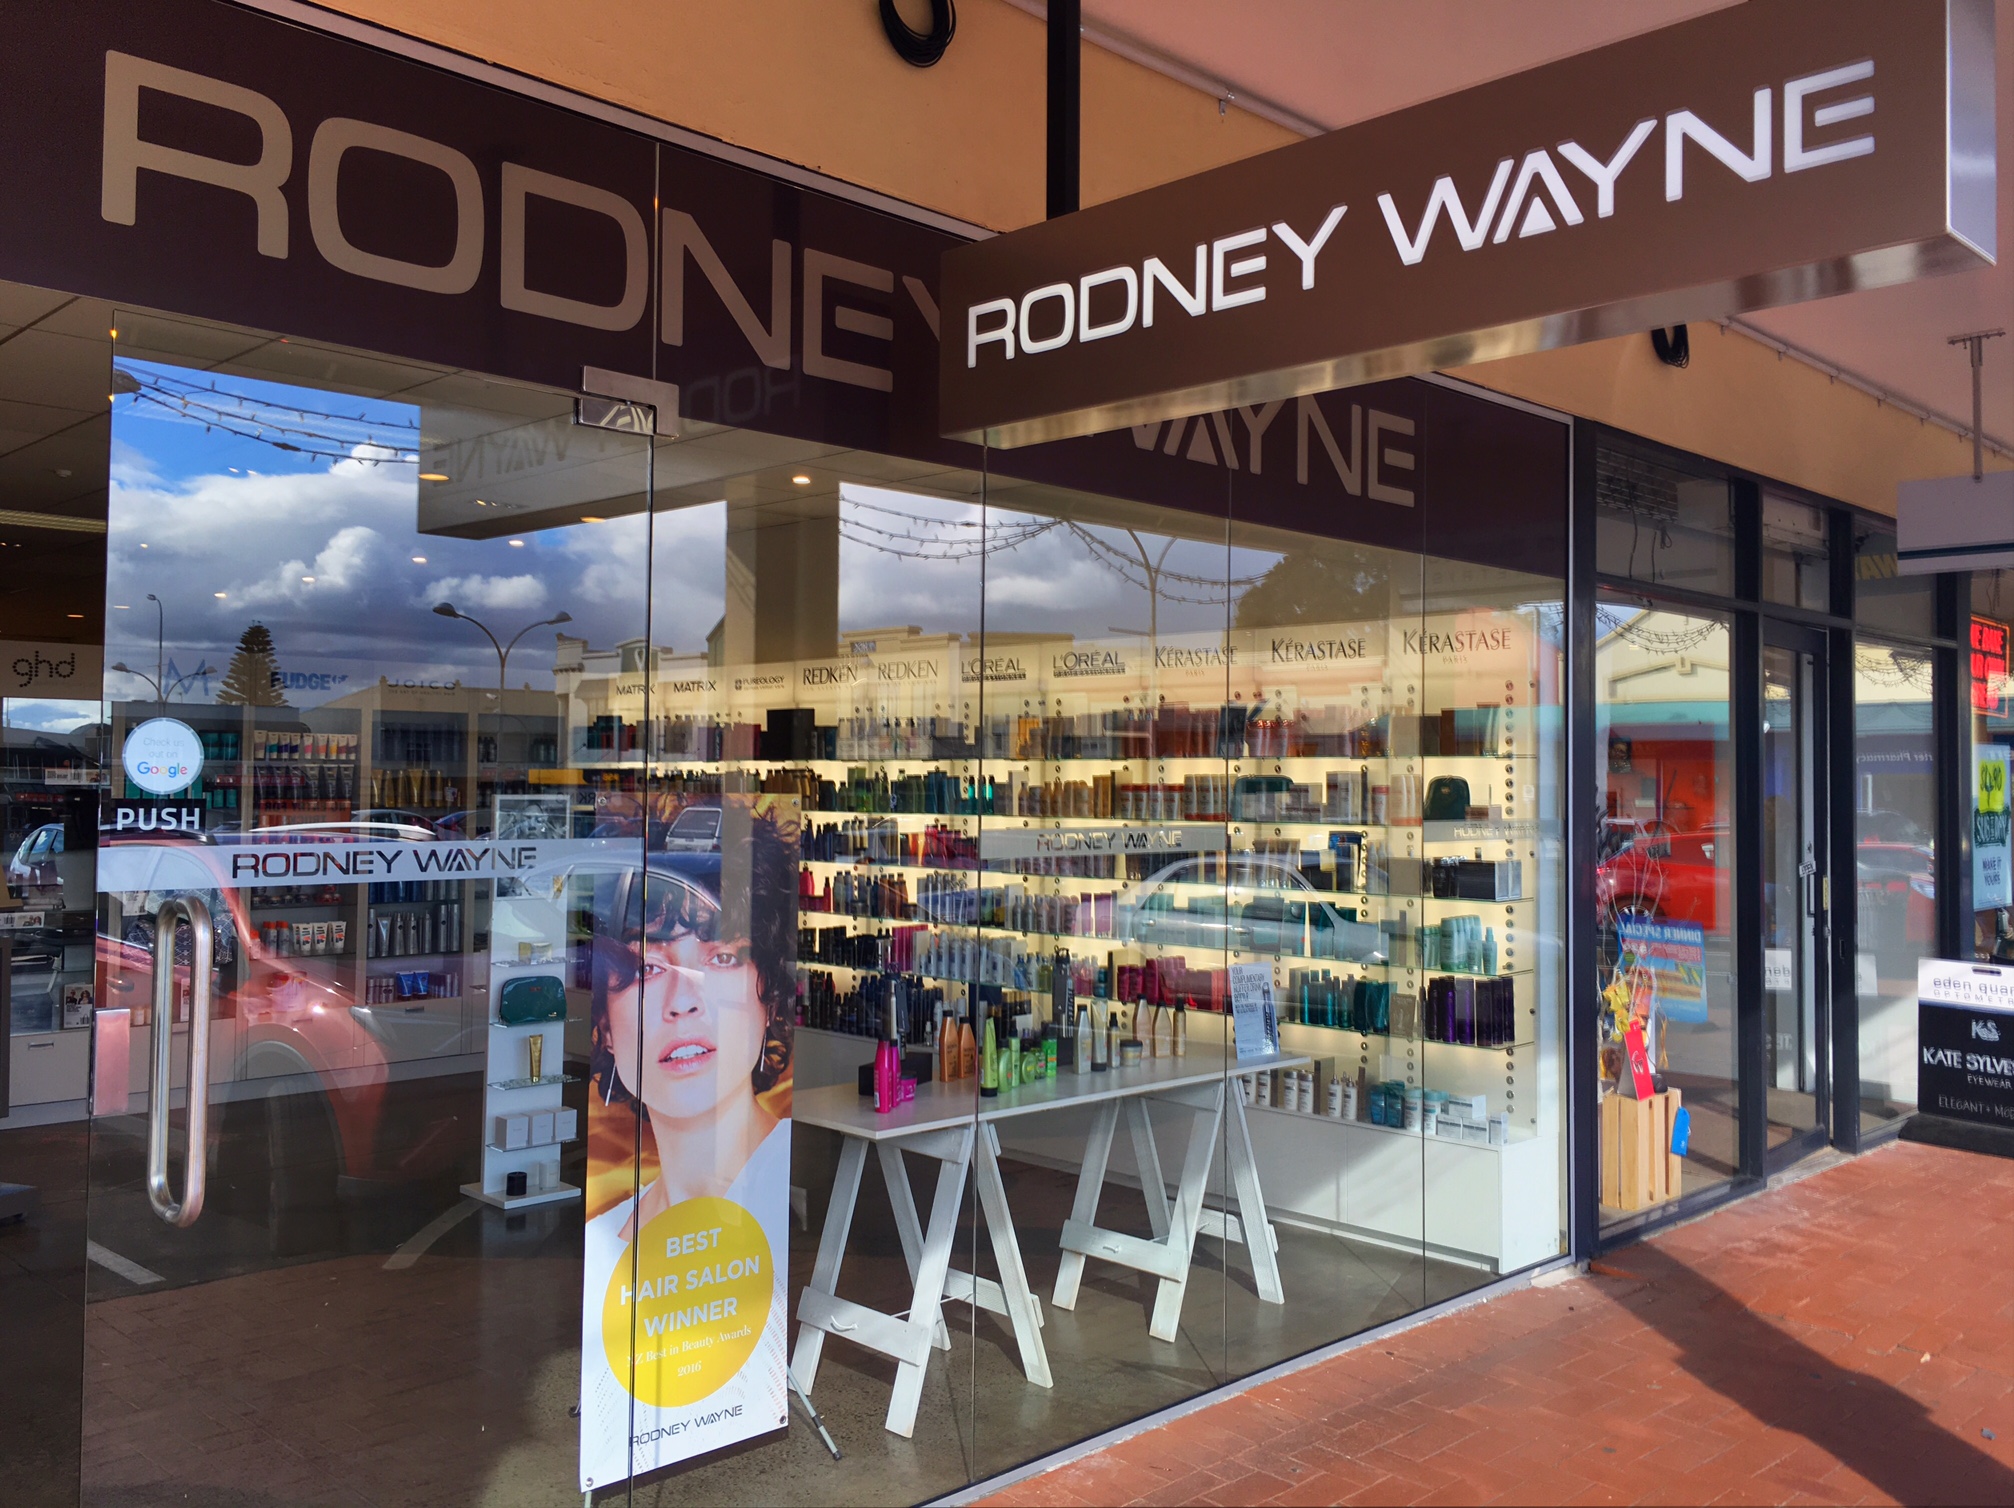 Rodney Wayne hair salon and Shampoo 'n' Things Eden Quarter 290 Dominion Road Mt Eden